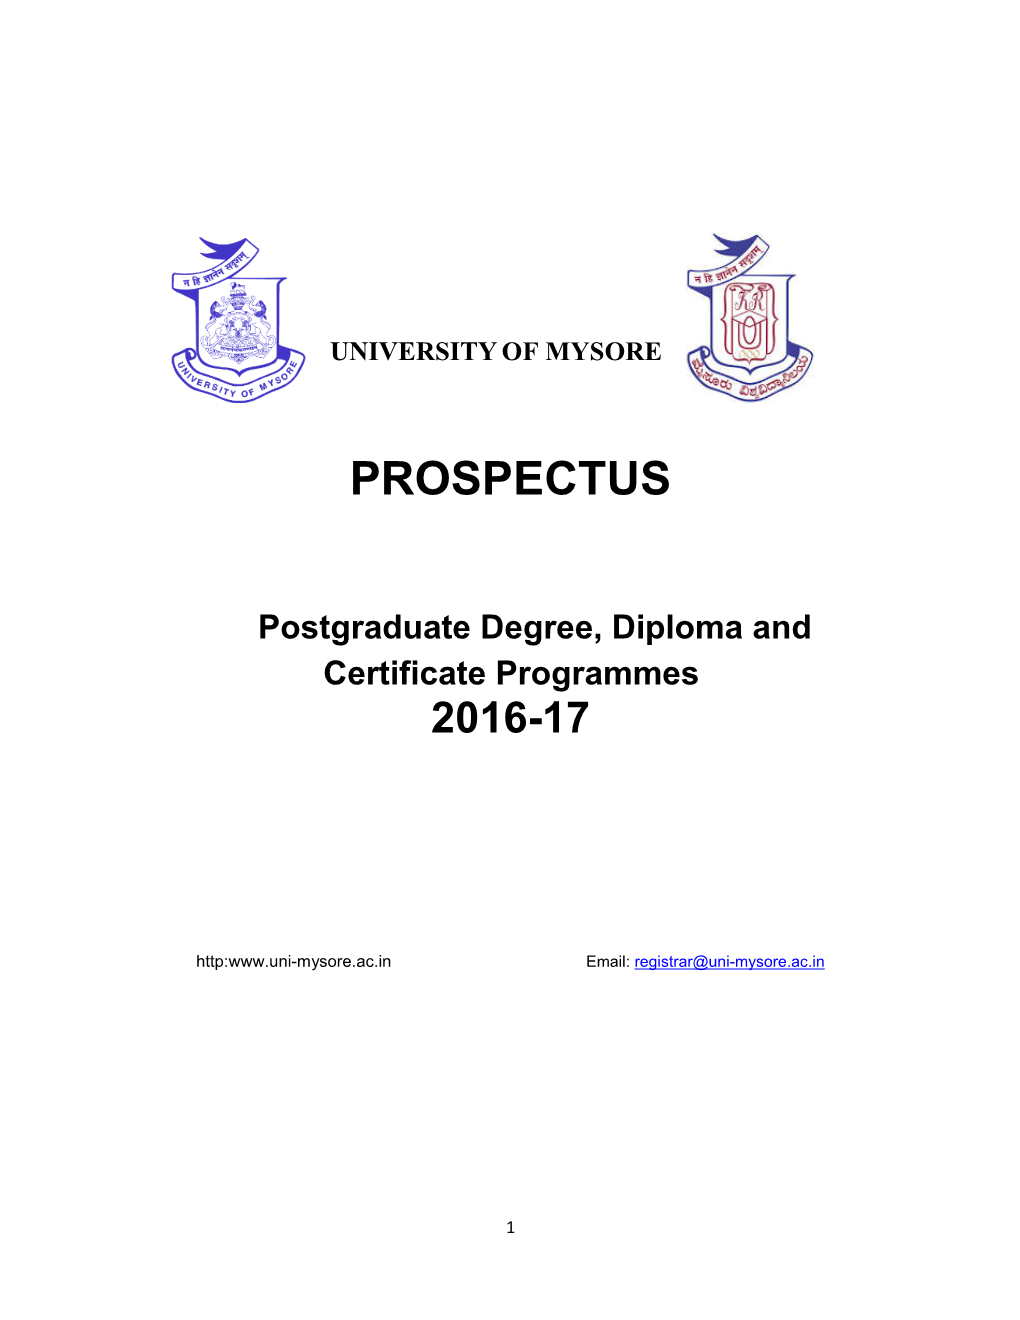 University of Mysore, 2016-17 Prospectus.Pdf